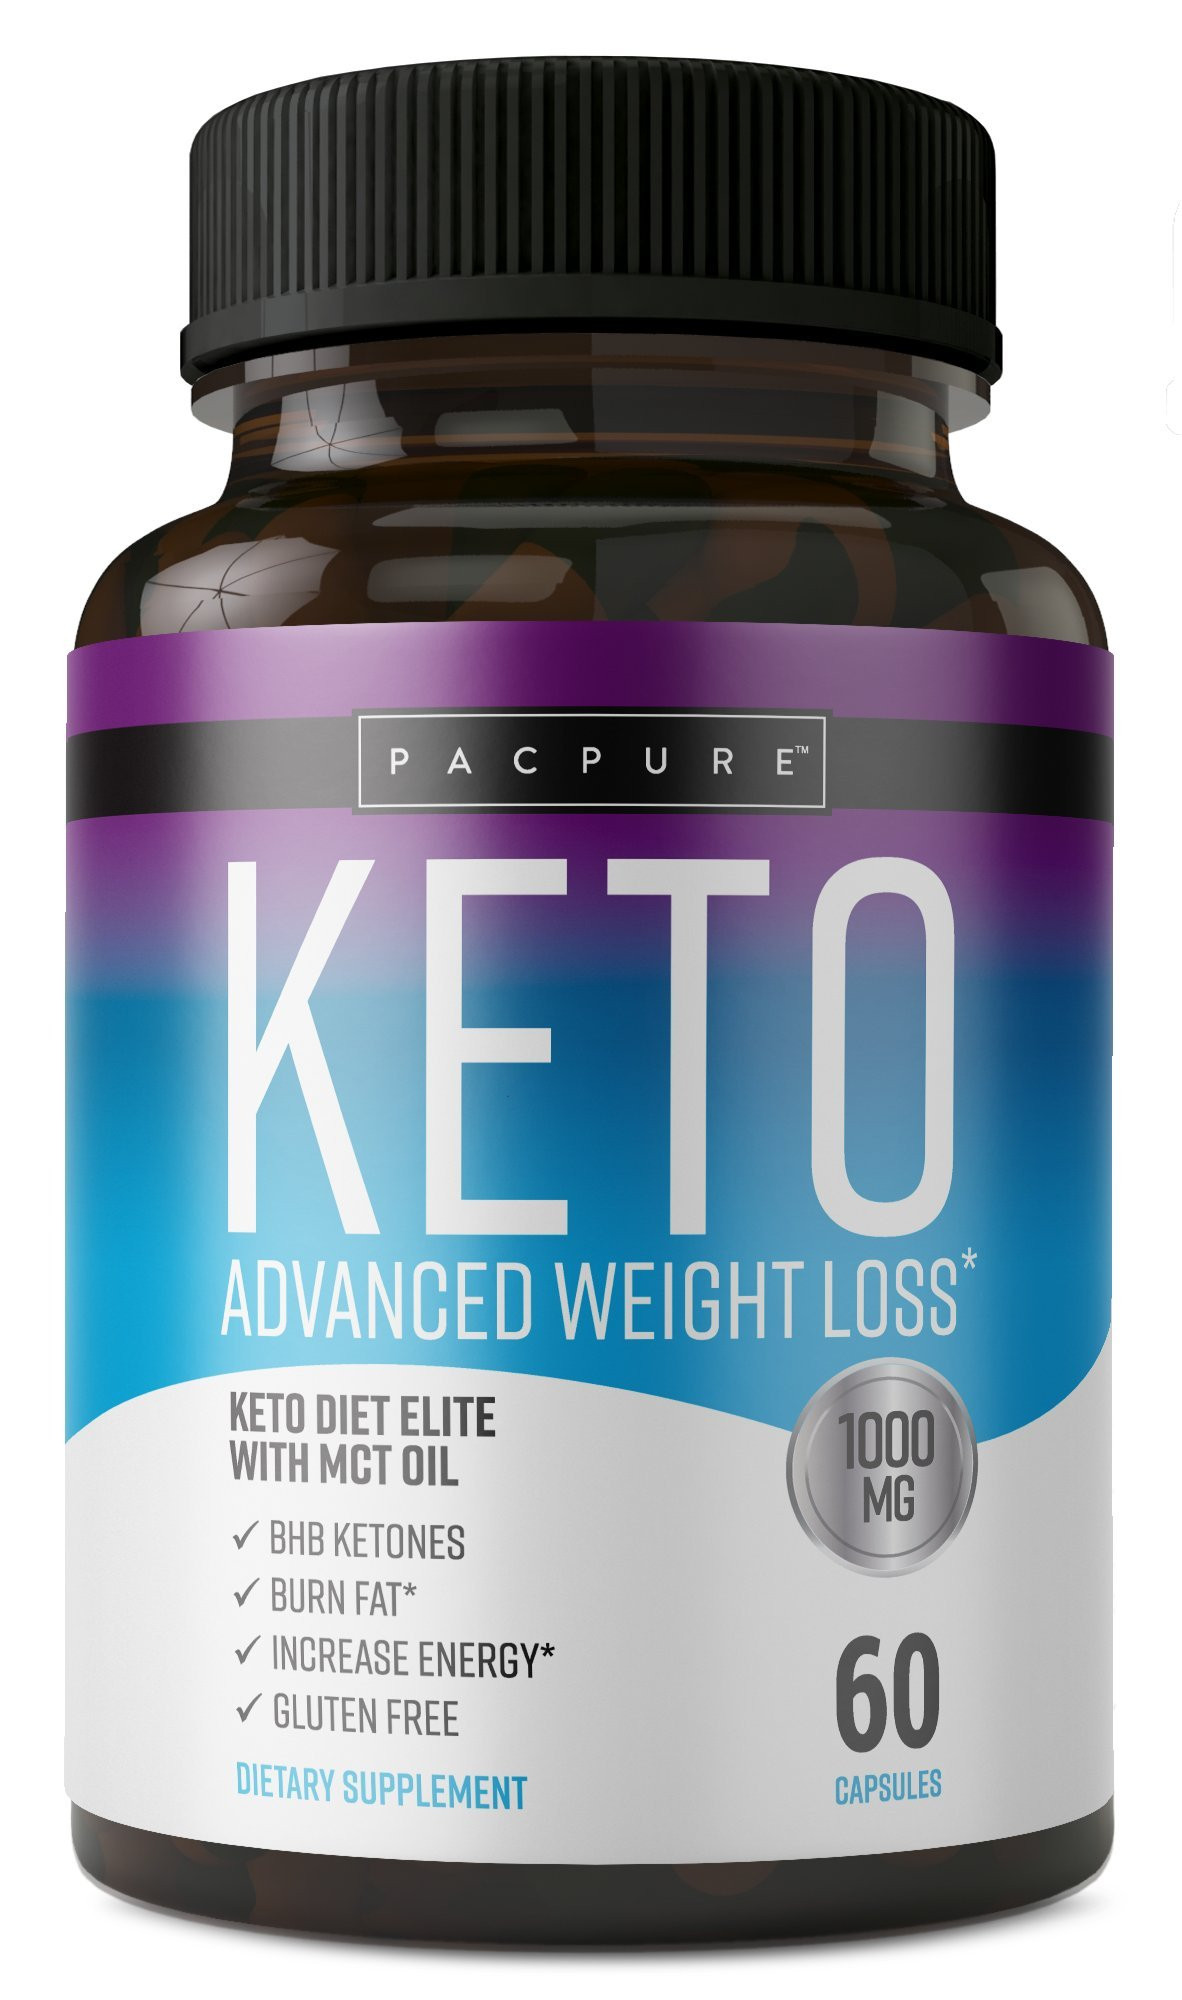 Keto Fat Burning Foods
 Keto Diet Elite 1000mg Keto Advanced Weight Loss